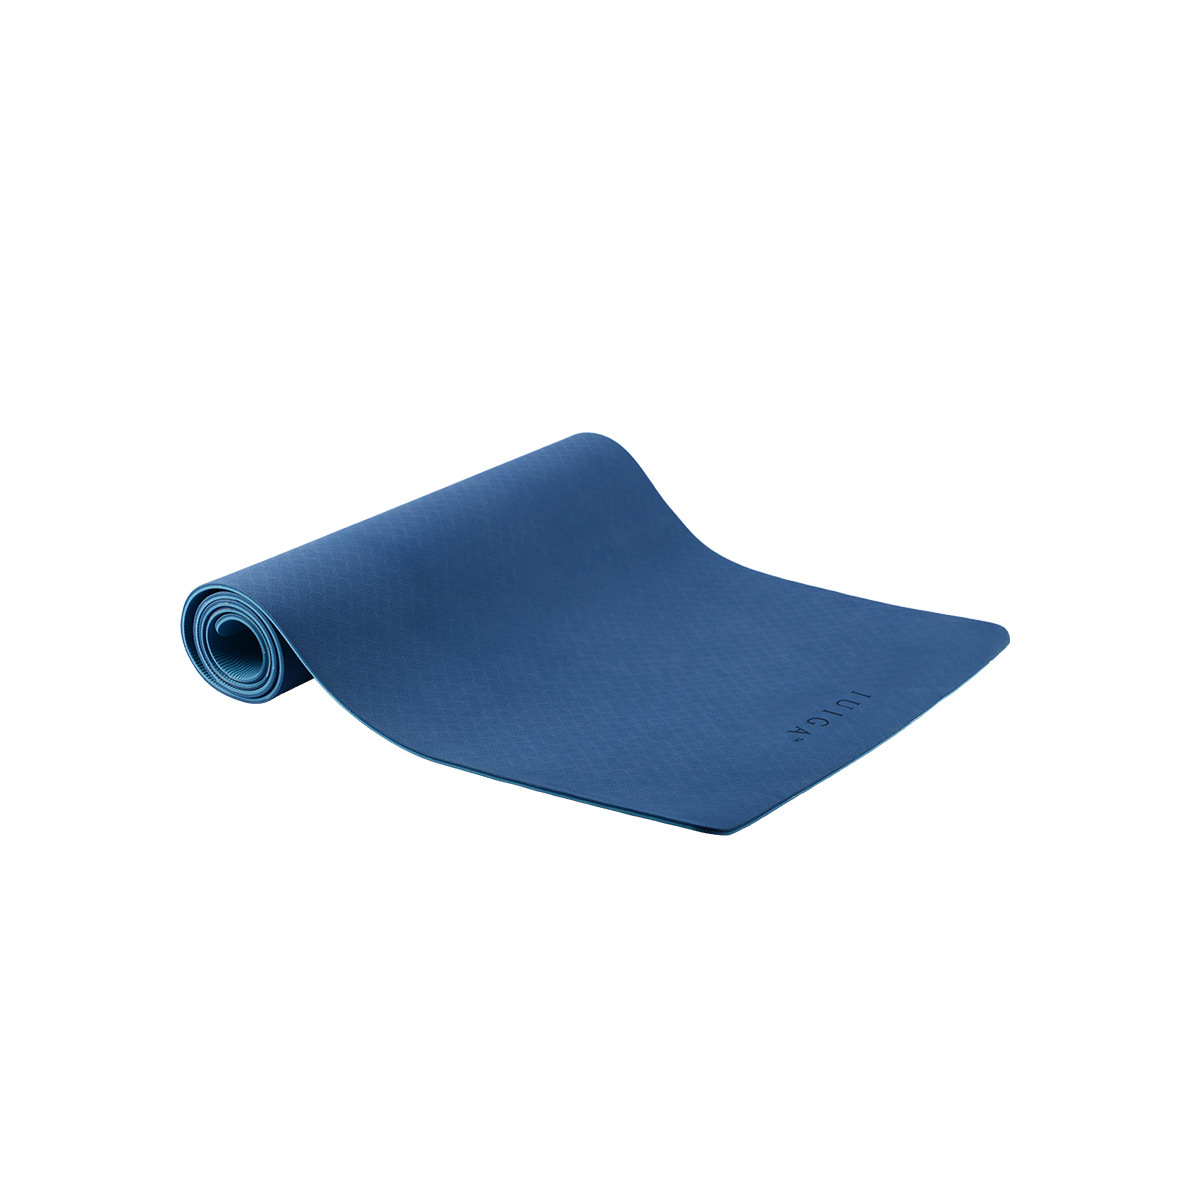  IUGA Yoga Set - Yoga Mat and Yoga Towel Included, Yoga Set for  Starters and advanced yogis : Sports & Outdoors